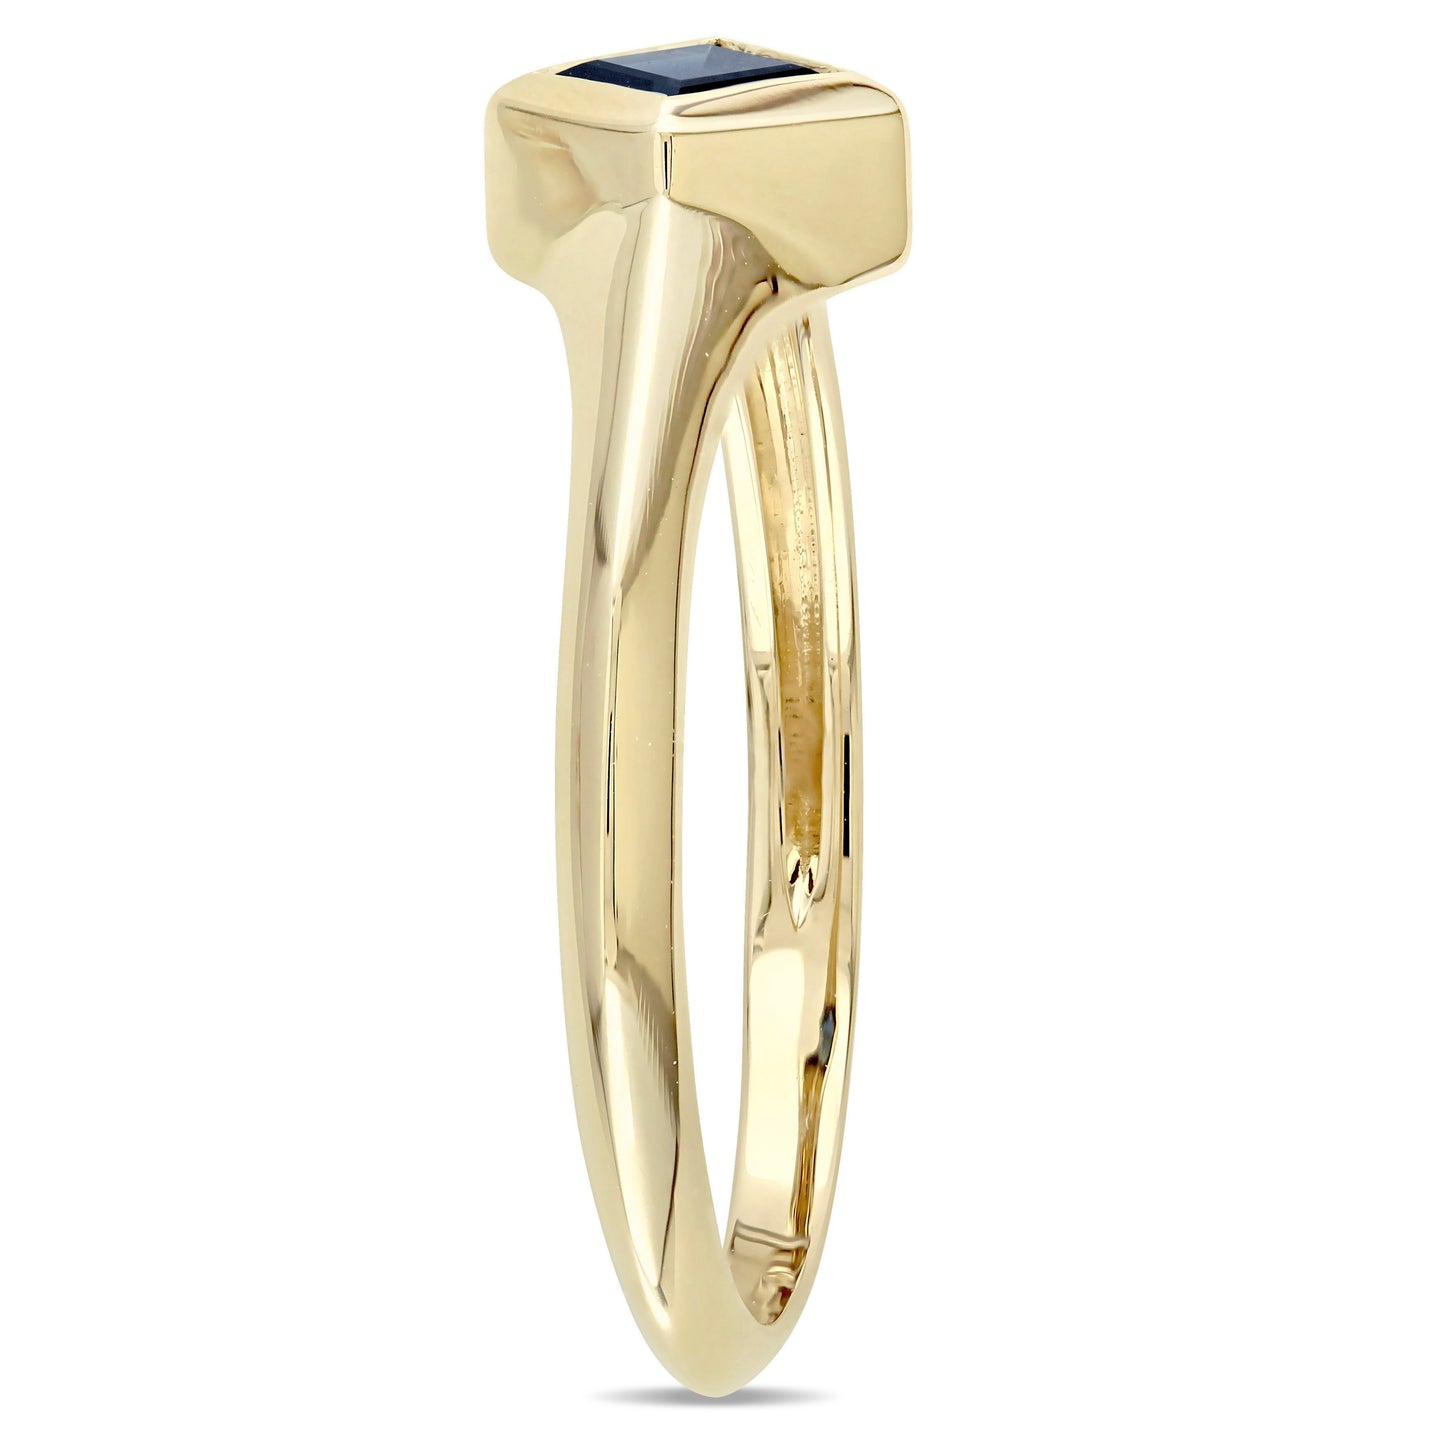 Princess Cut Sapphire Bezel Ring in 14k Yellow Gold